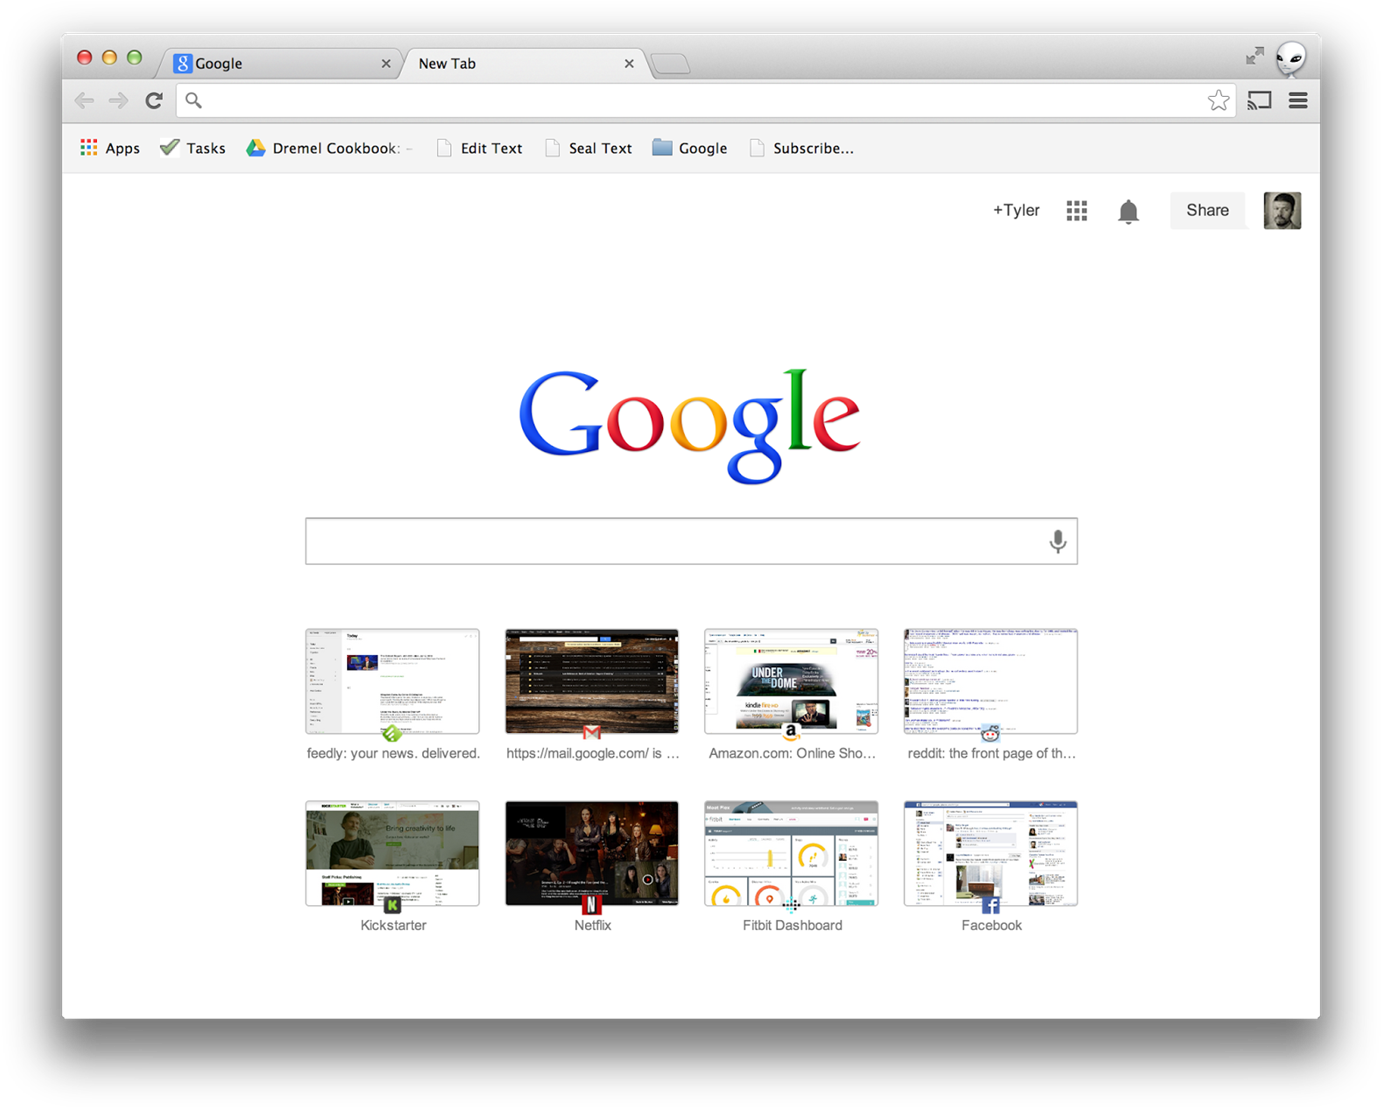 Google Homepage Browser View